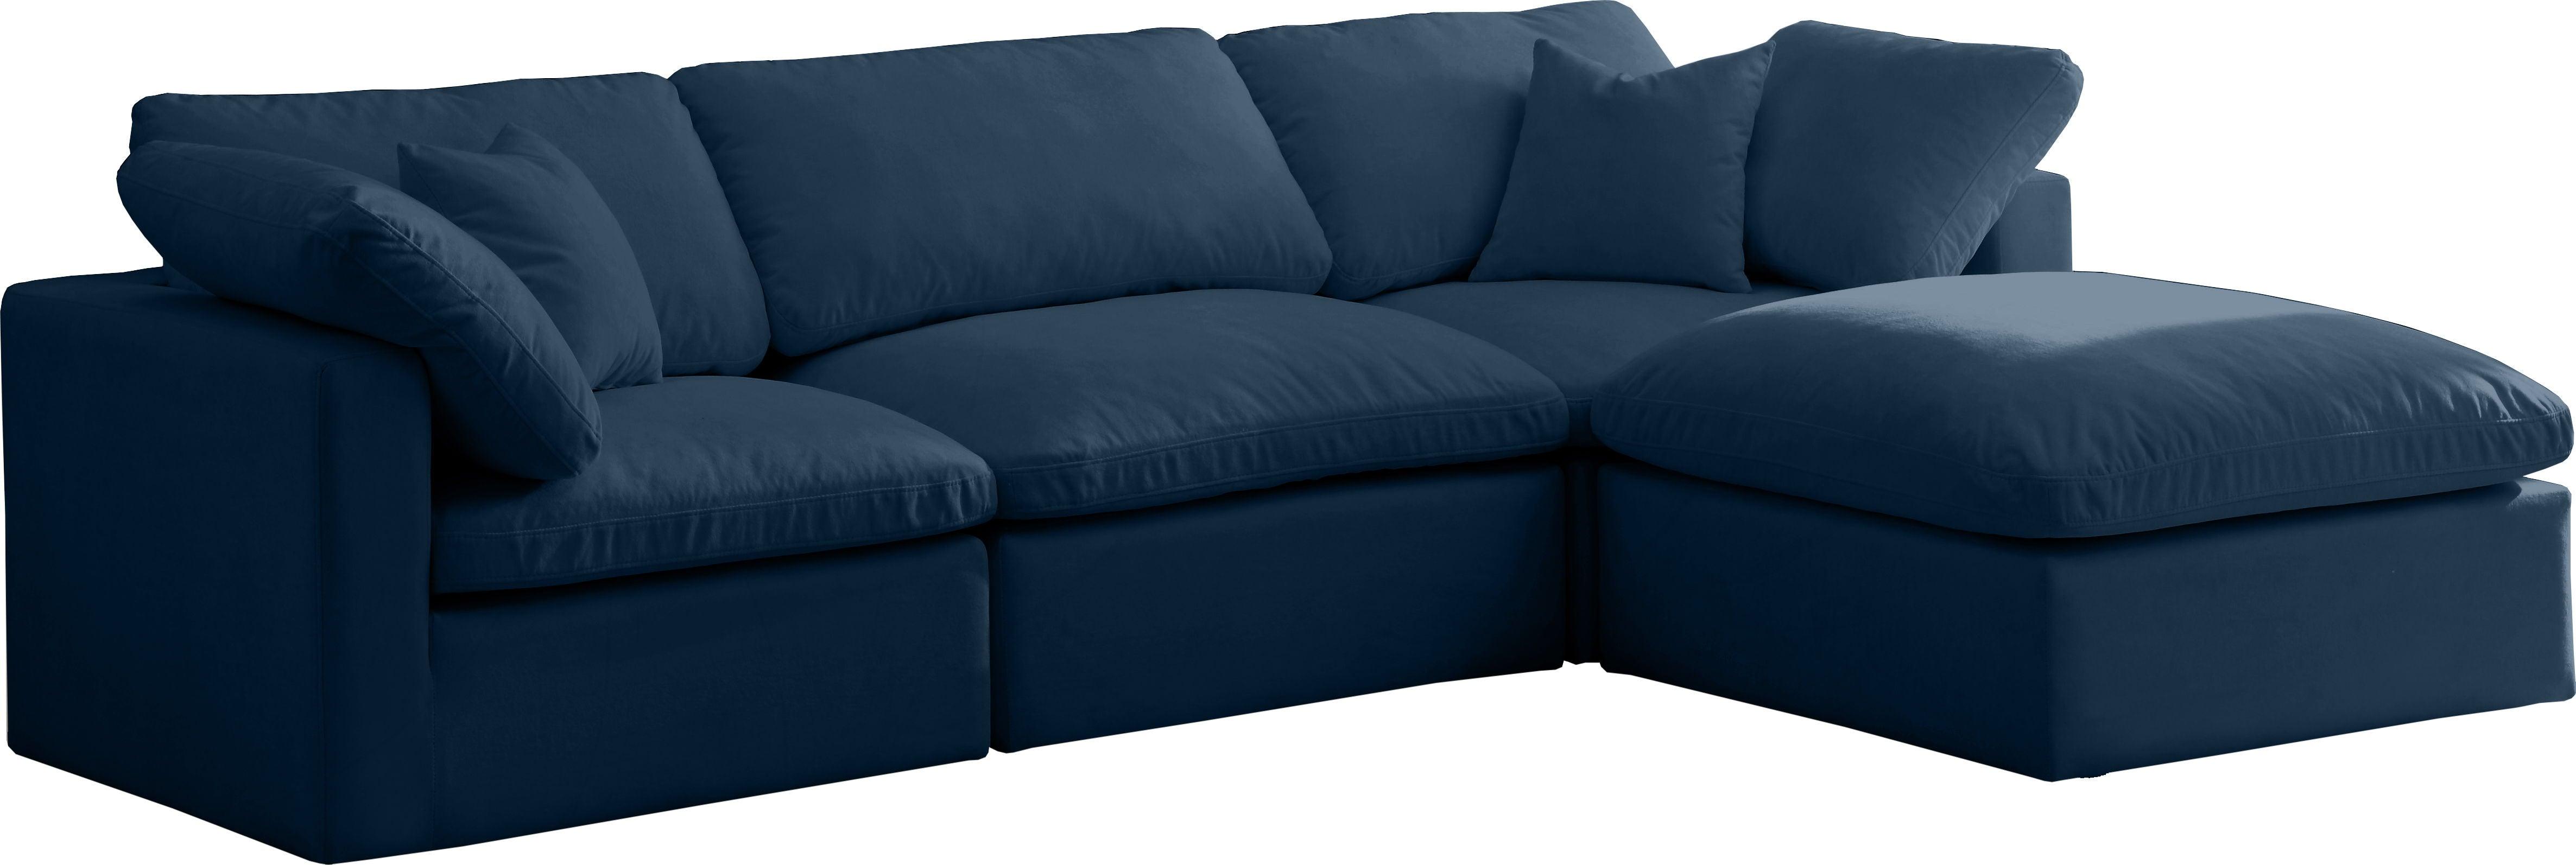 Meridian Furniture - Plush - Velvet Standart Comfort Modular Sectional Standart - Navy - Fabric - Modern & Contemporary - 5th Avenue Furniture